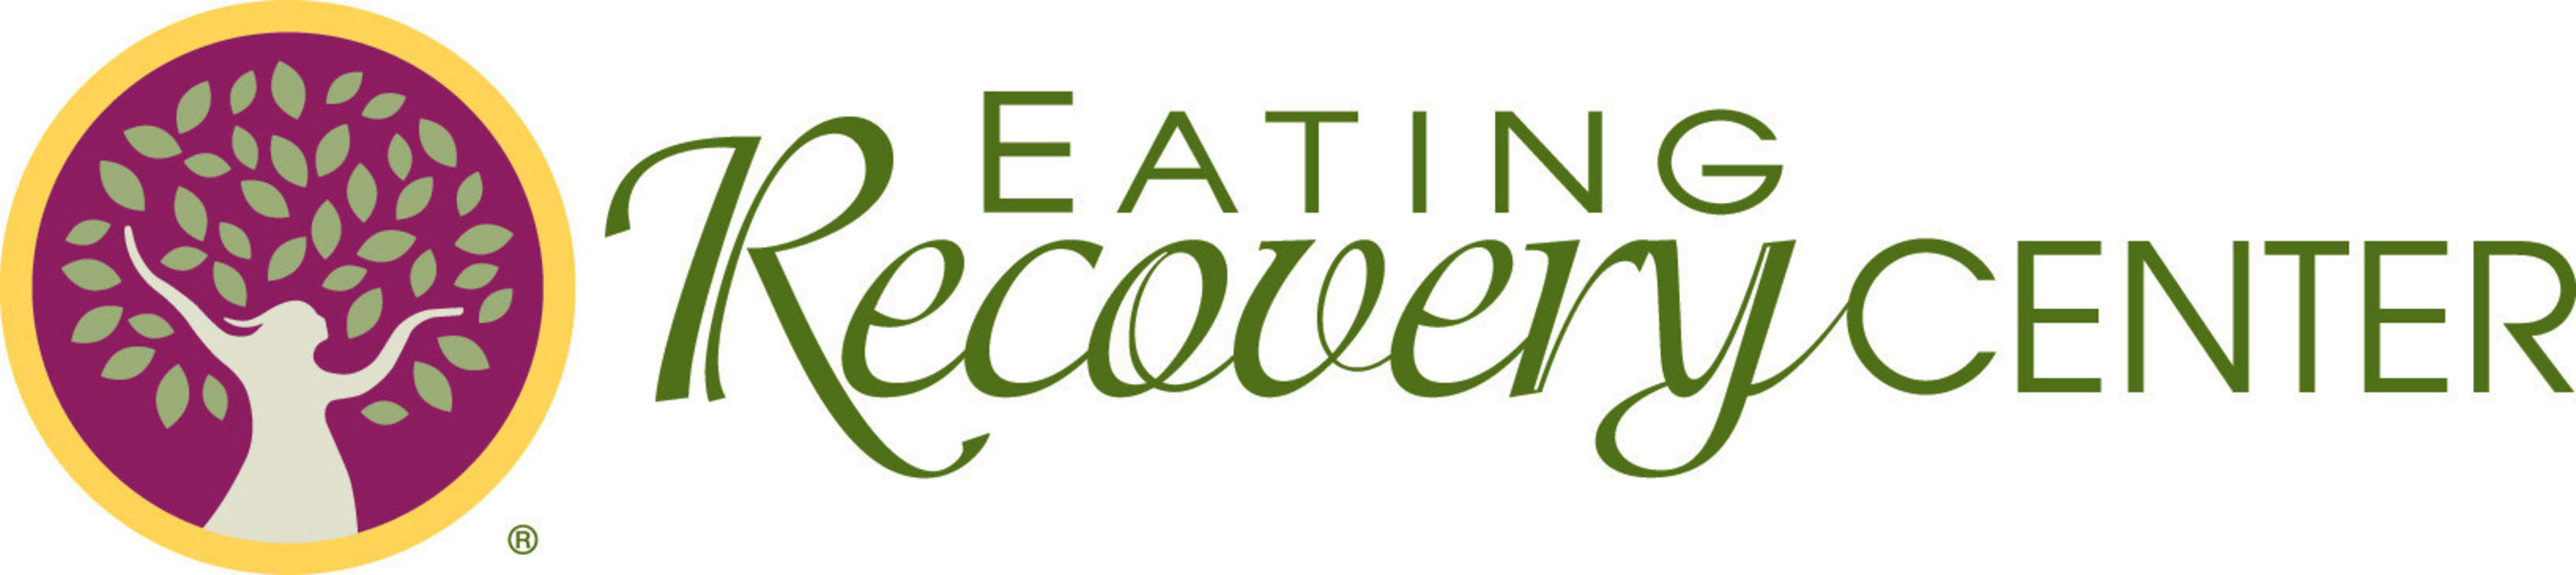 www.EatingRecoveryCenter.com. (PRNewsFoto/Eating Recovery Center)